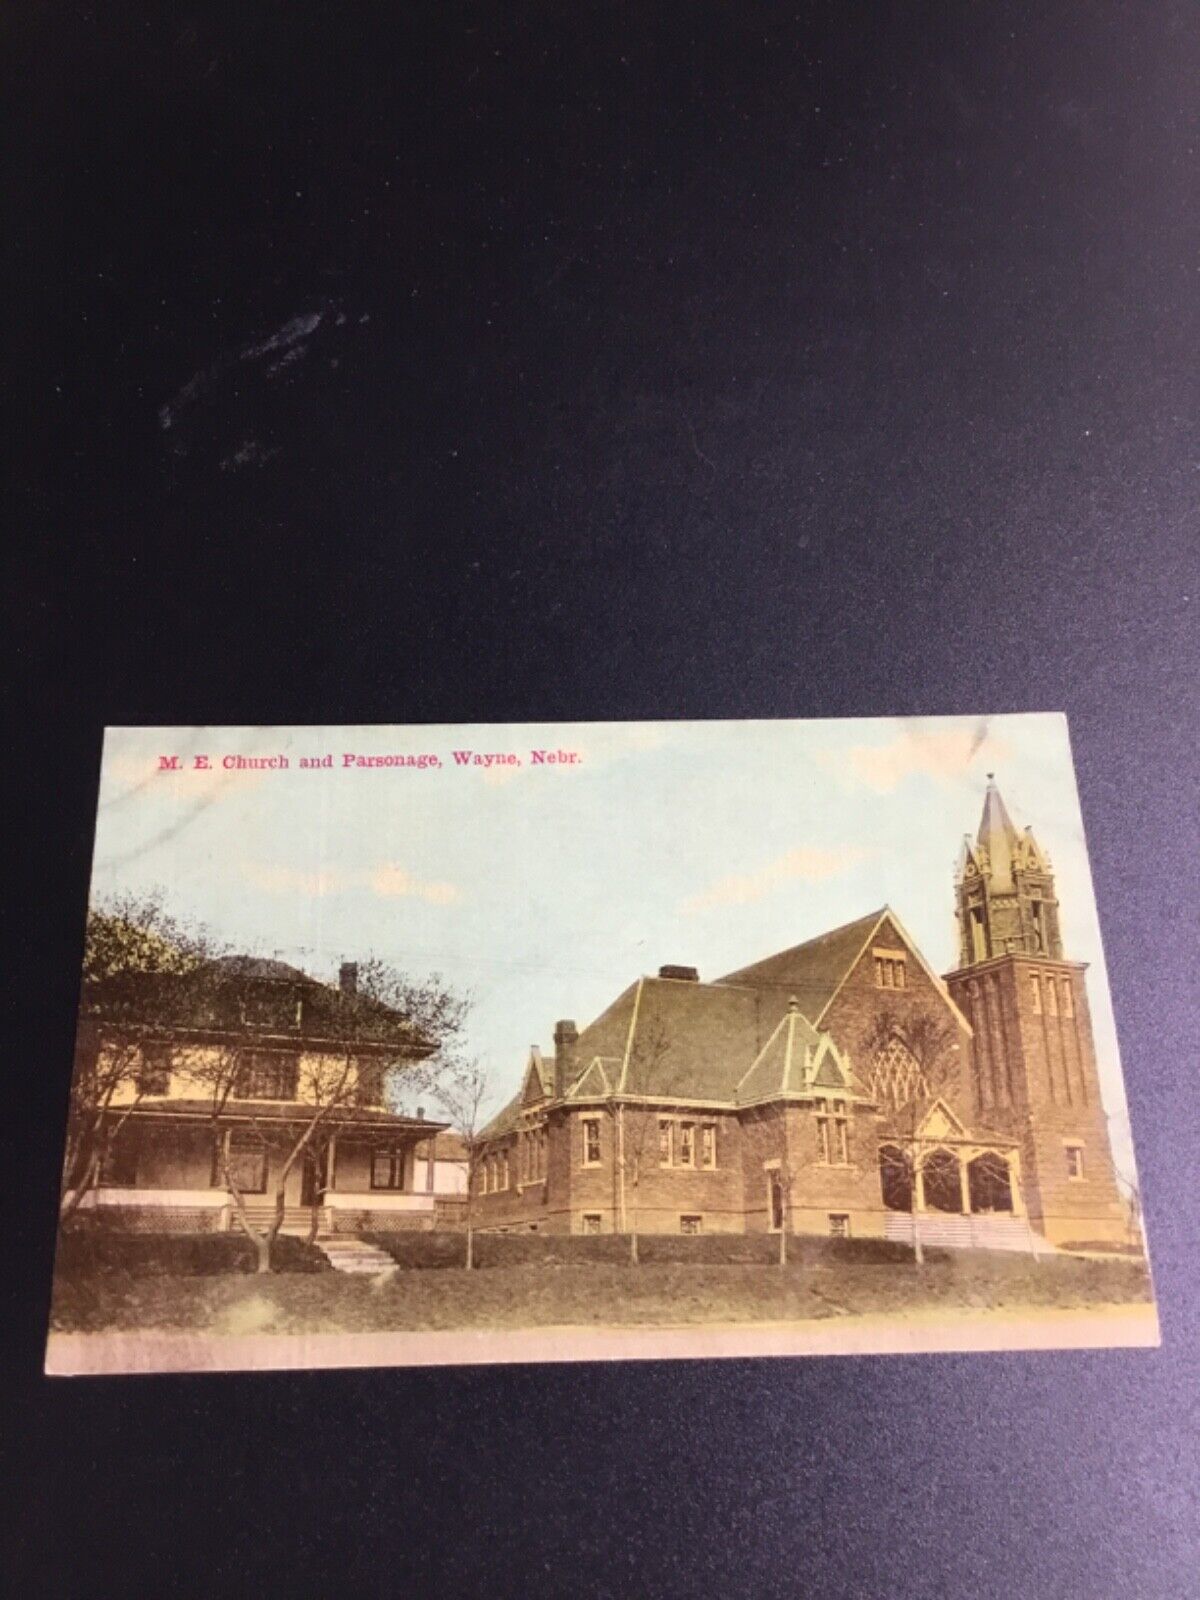 1911 Wayne, Nebraska Postcard - M.E. Church and Parsonage 923